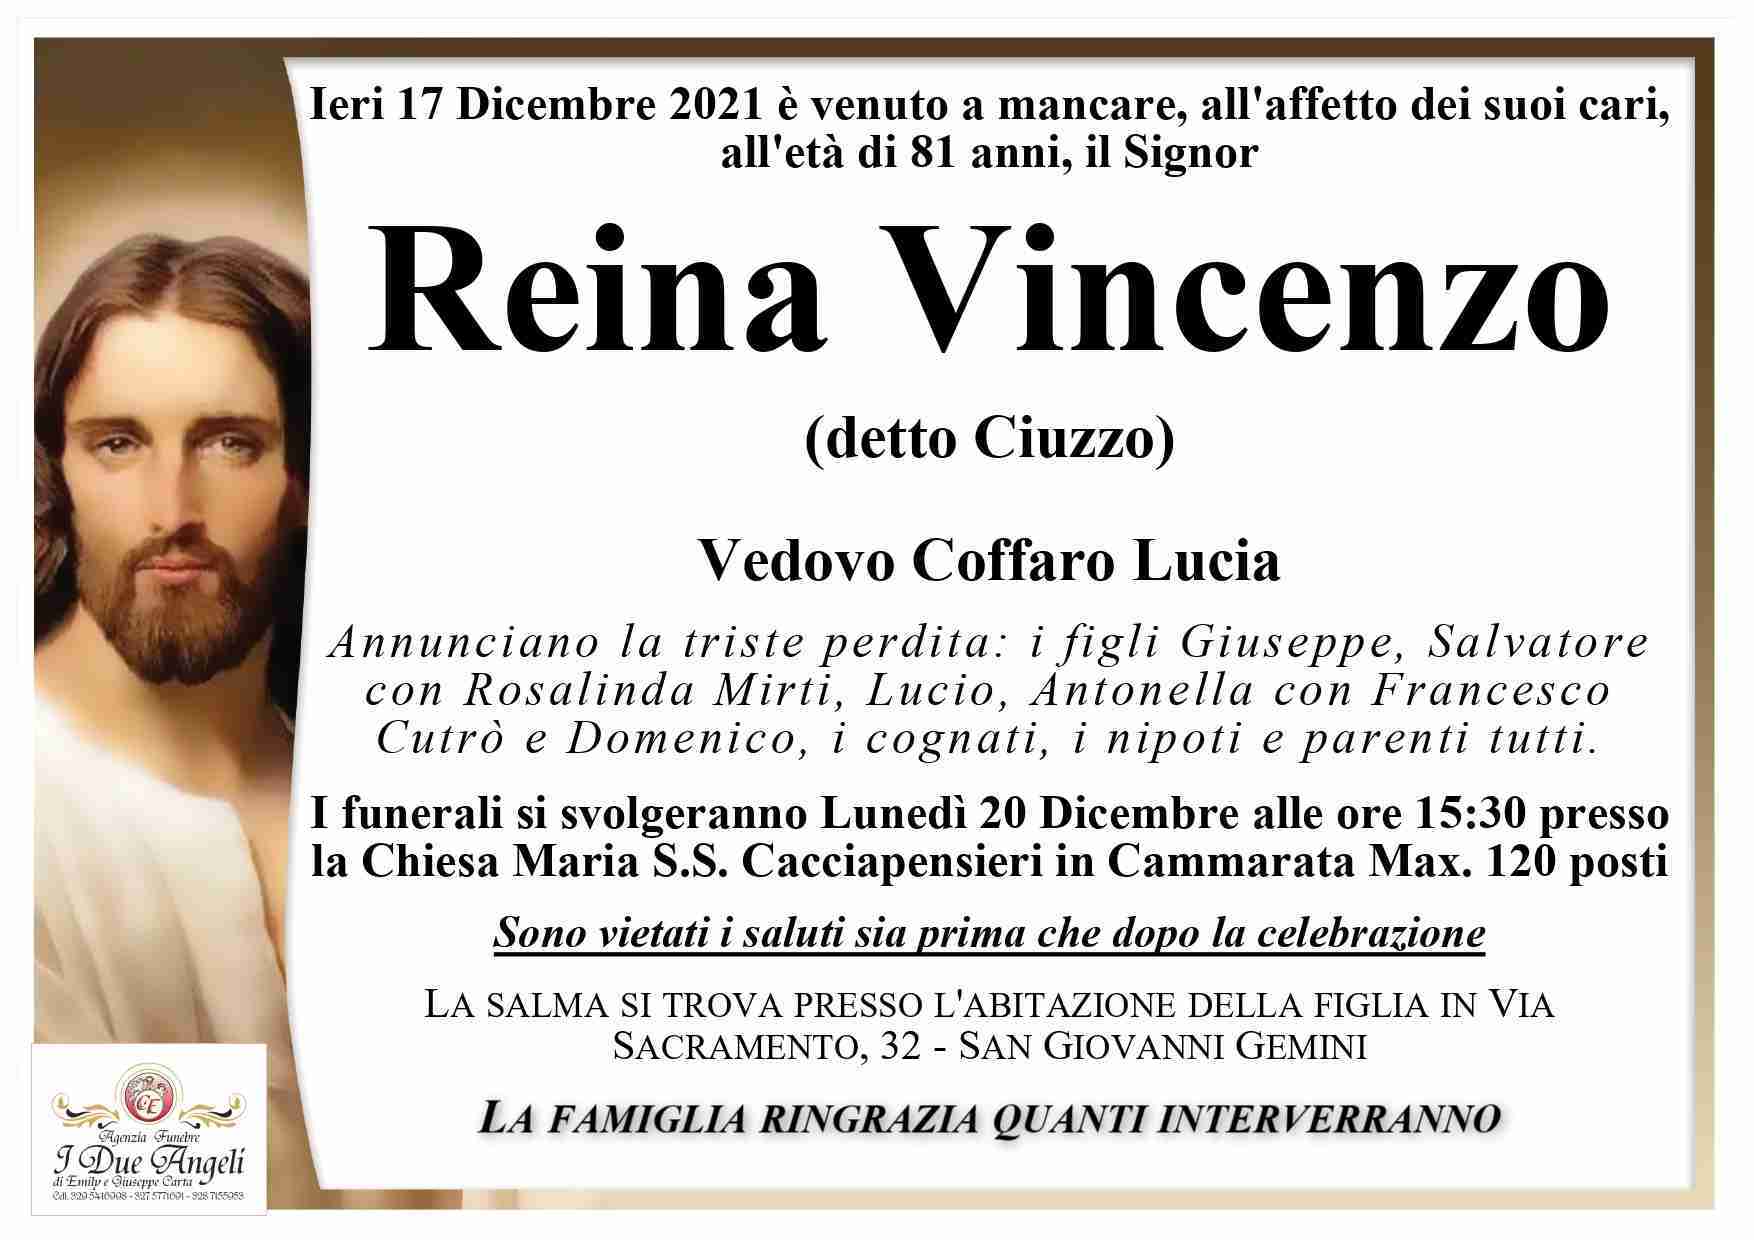 Vincenzo Reina